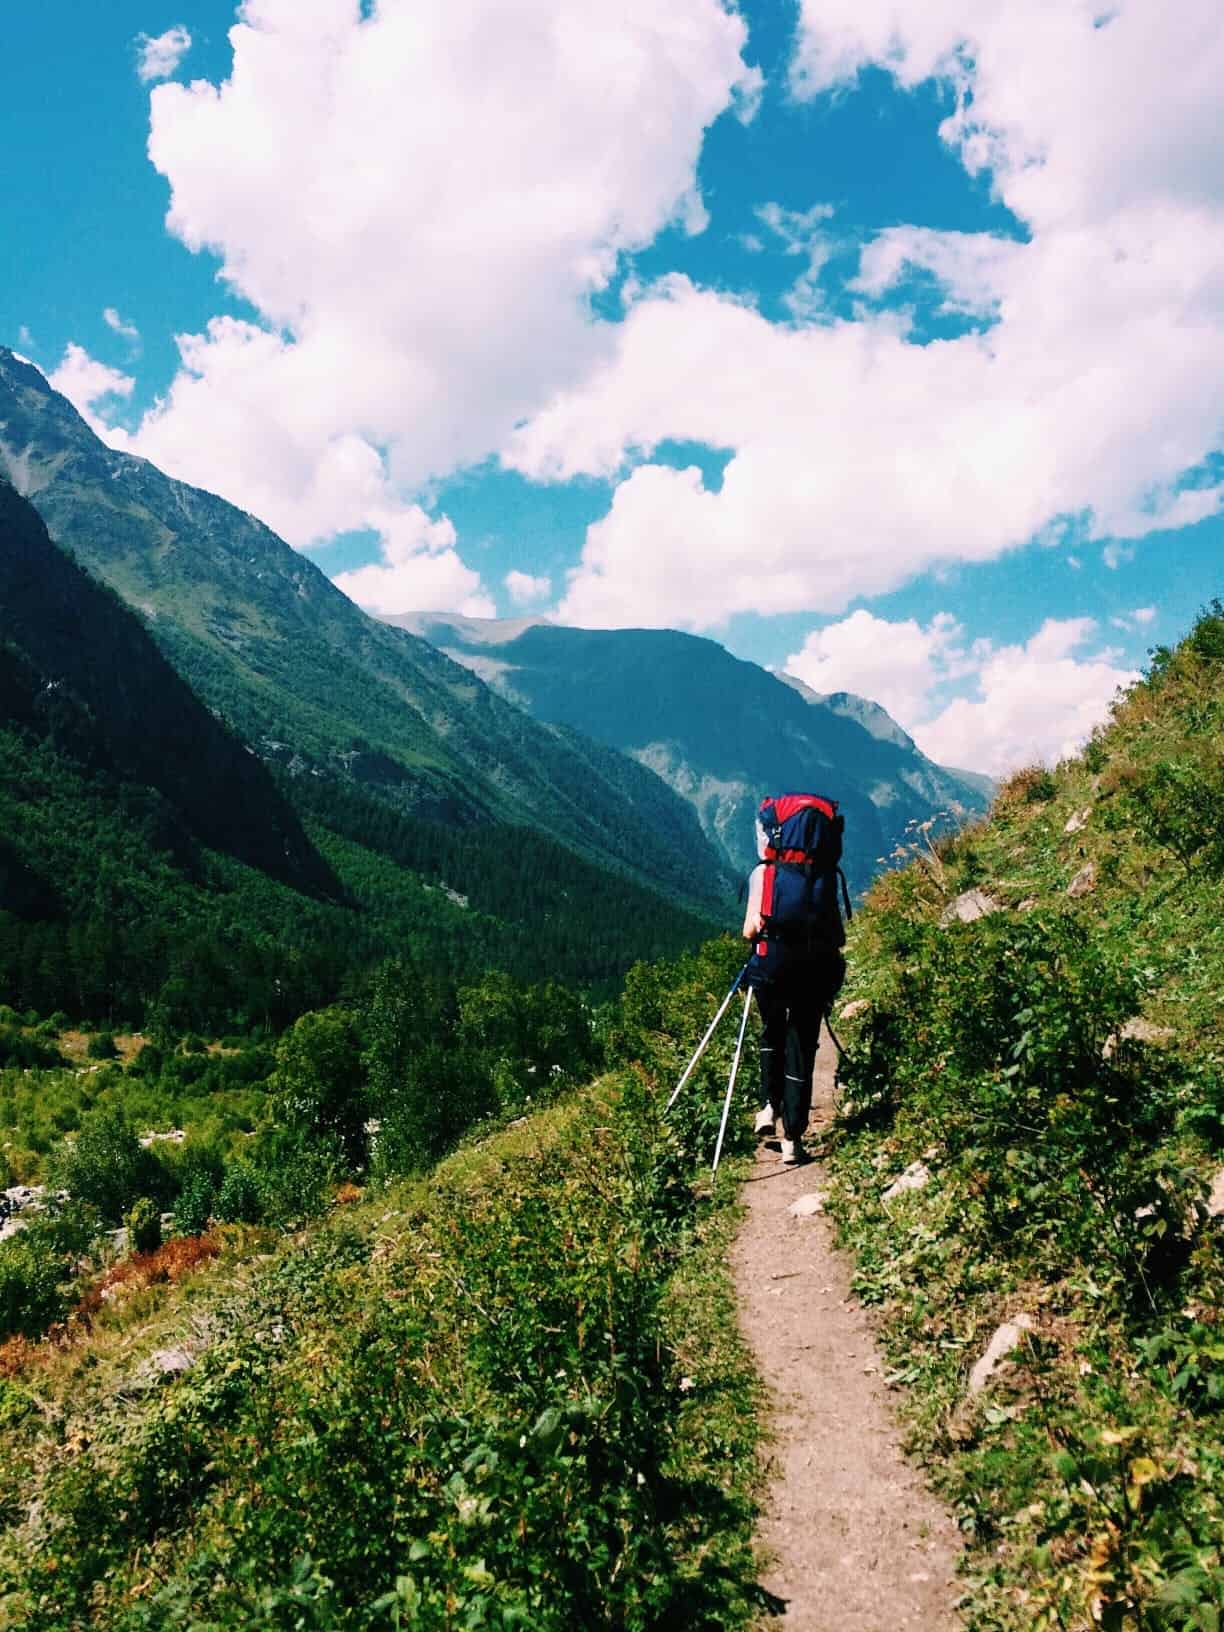 Backpacker hiking in a mountain range